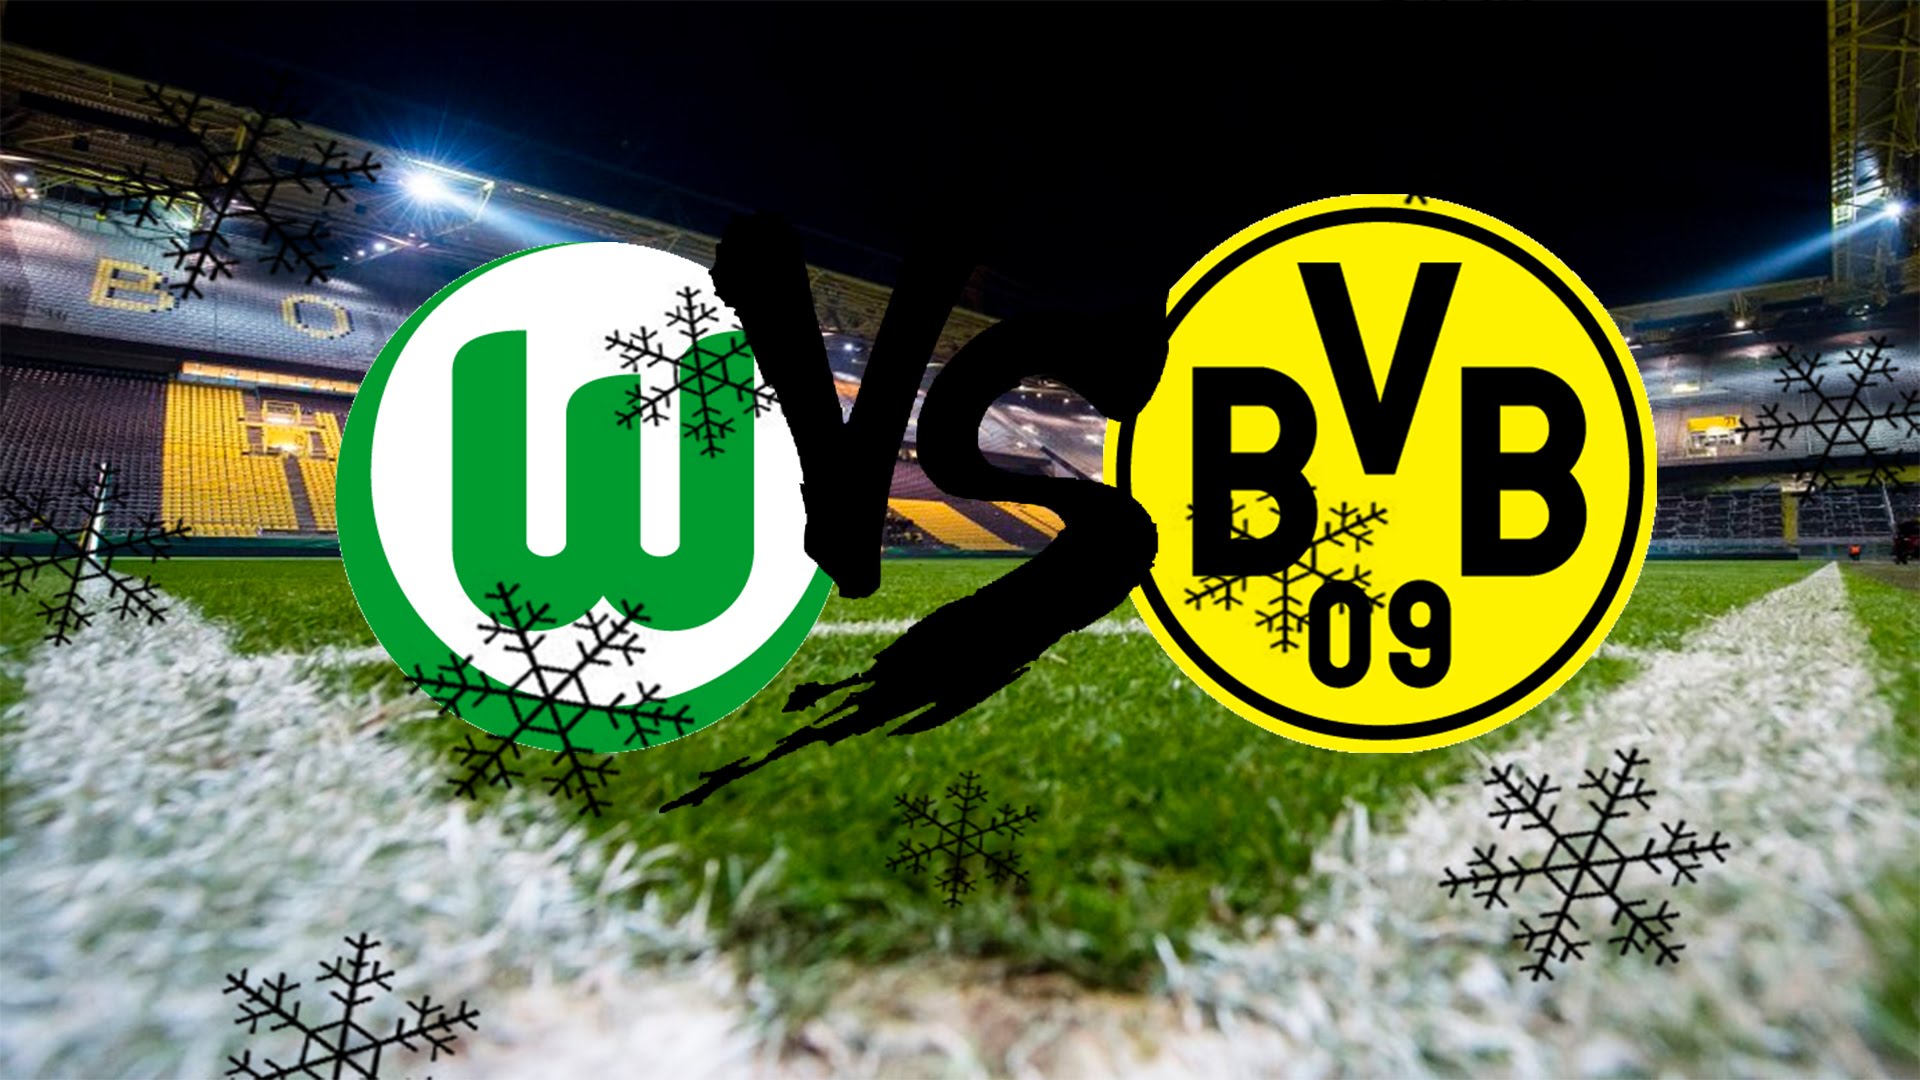 Prediksi Pertandingan Wolfsburg Vs Borussia Dortmund 19 Agustus 2017